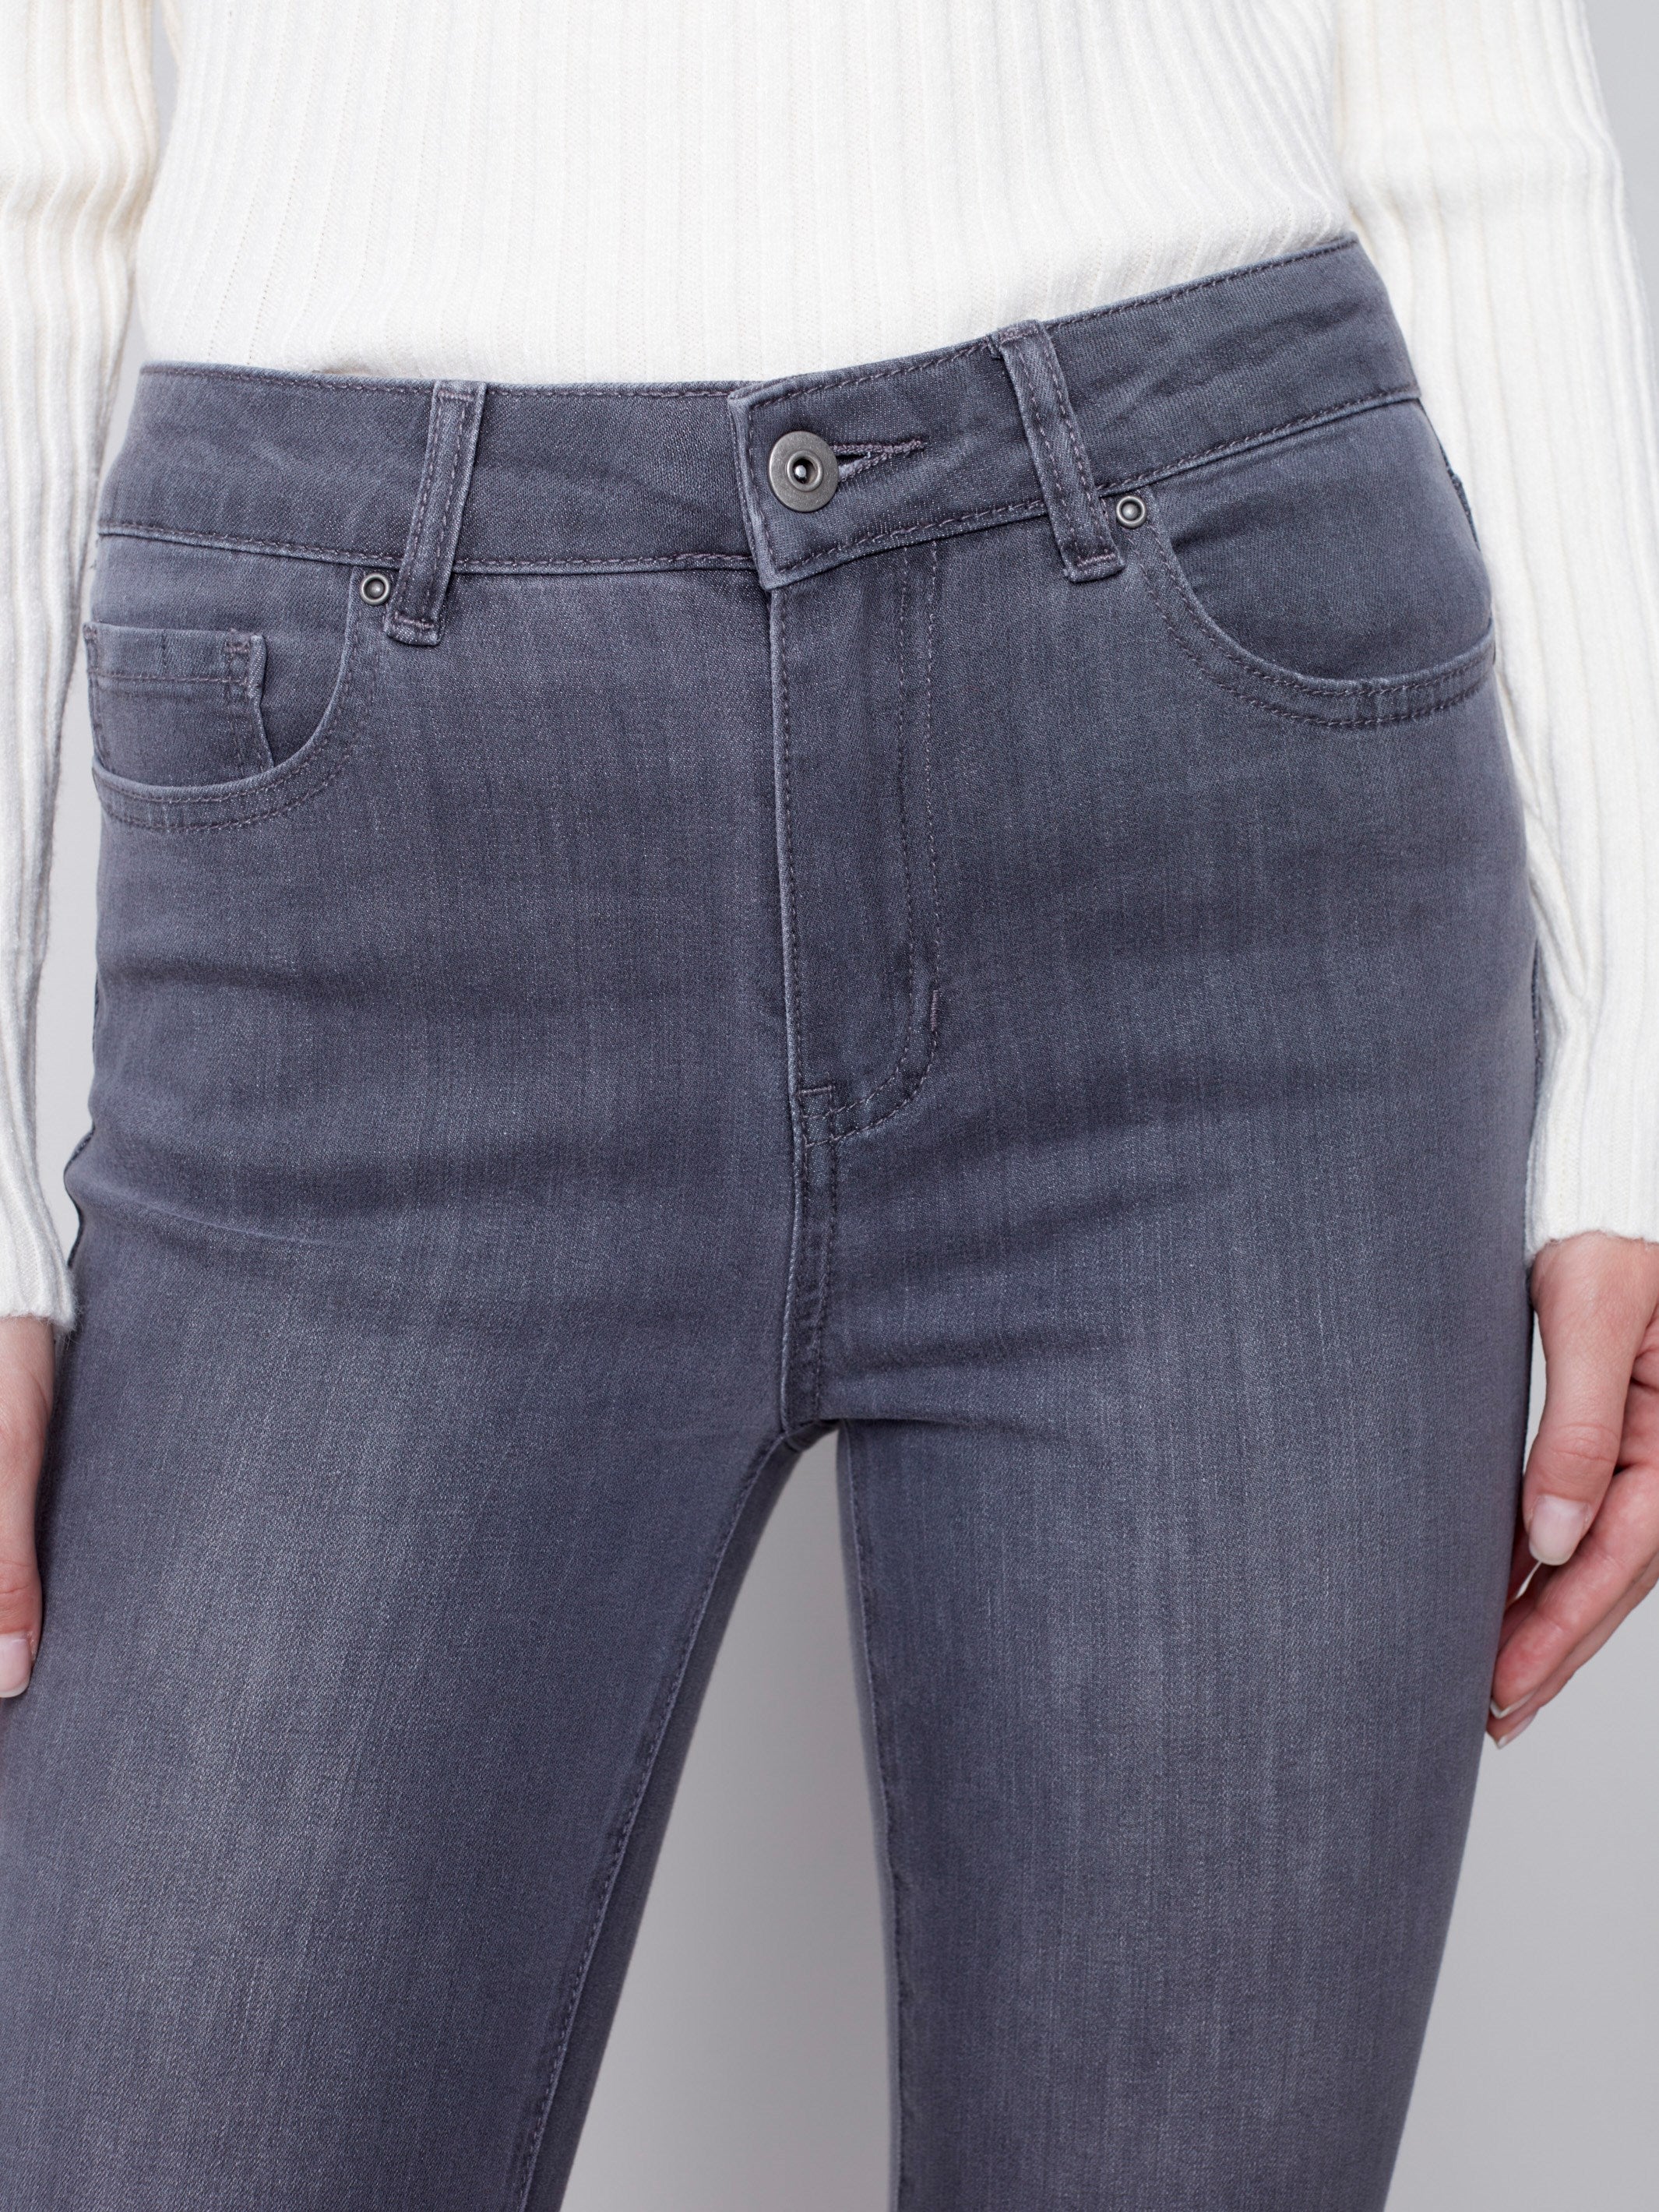 Bootcut Jeans with Asymmetrical Fringed Hem - Medium Gray